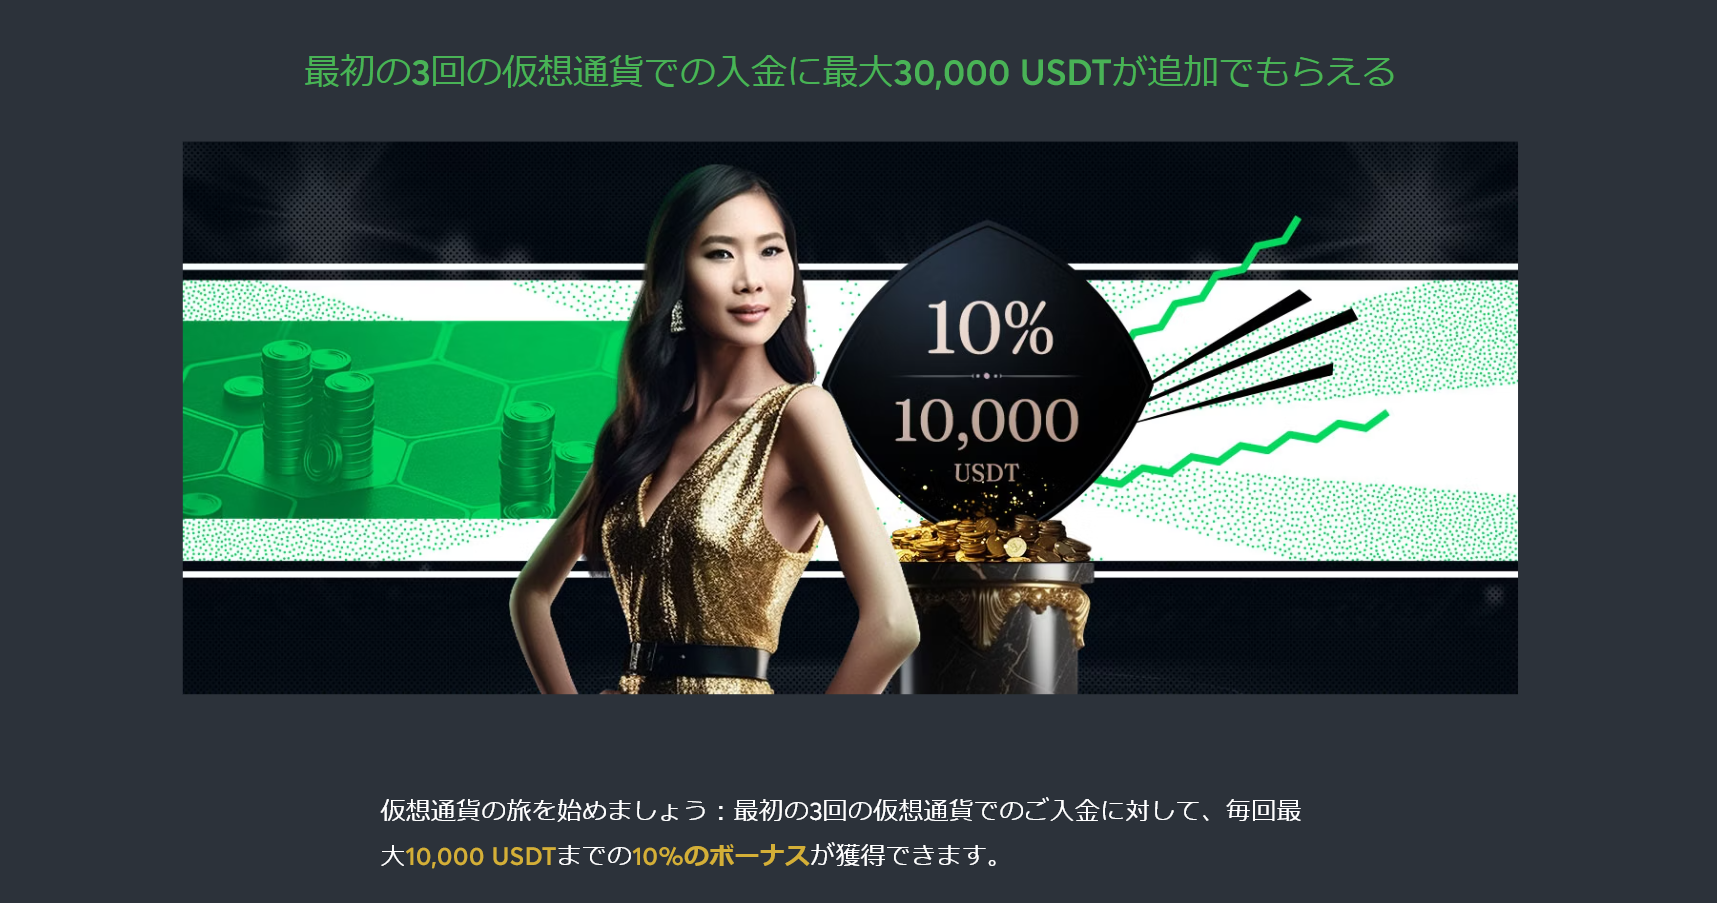 Sportsbet.io 10% Bonus promo banner